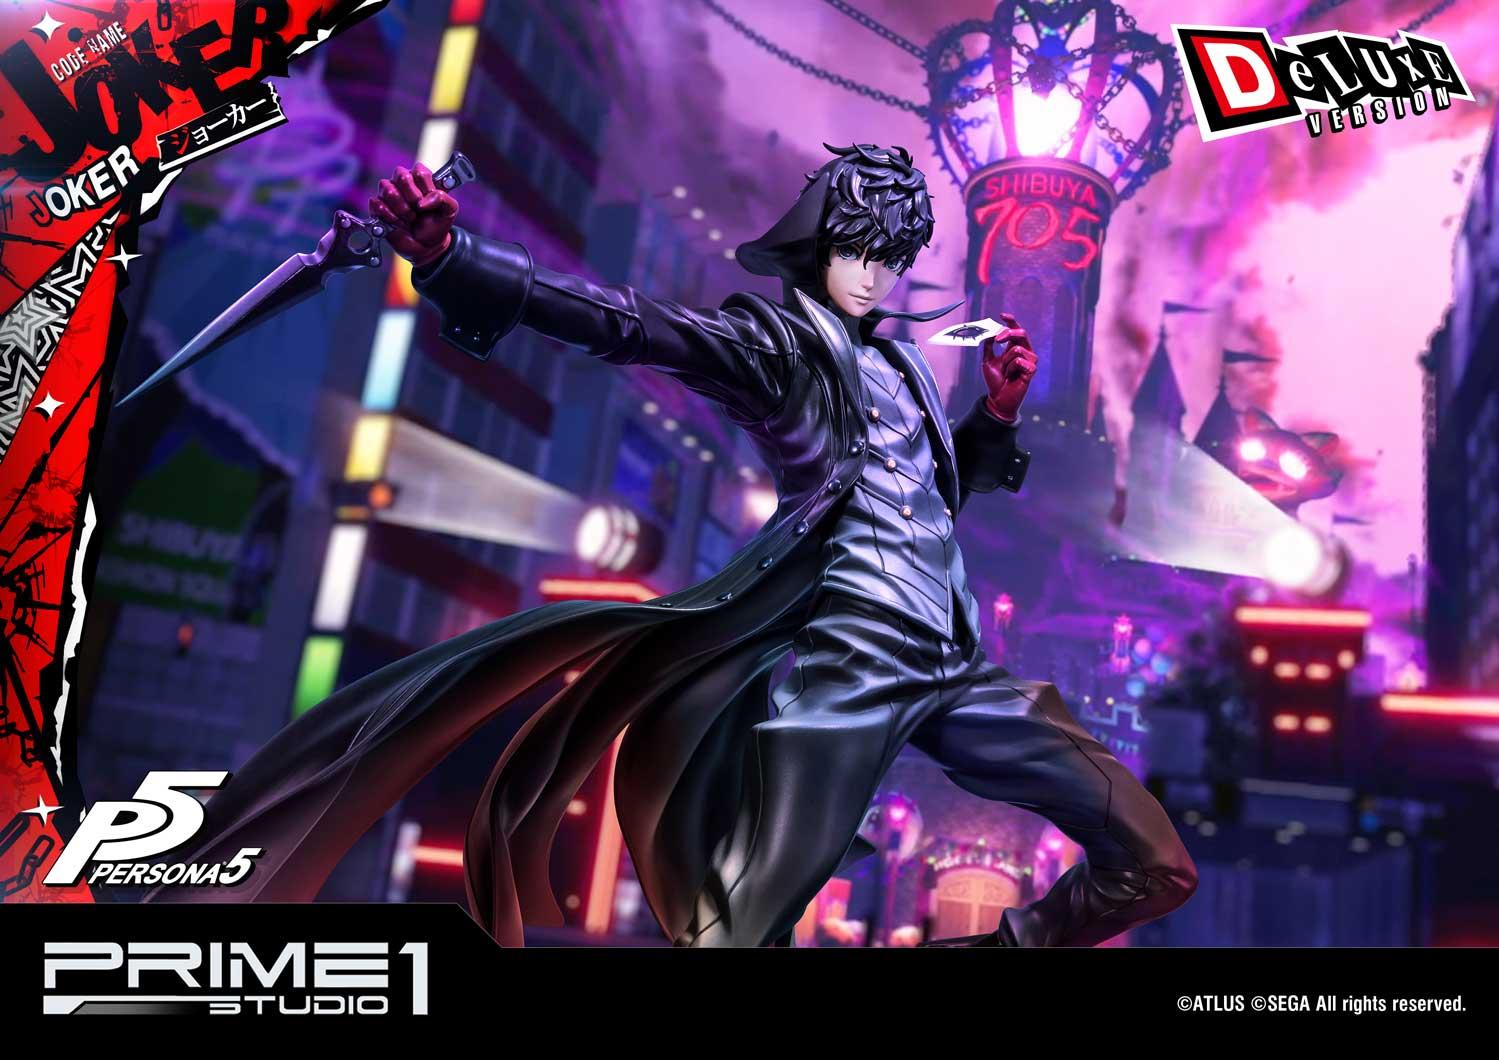 Persona 5 Joker print · mikaron · Online Store Powered by Storenvy